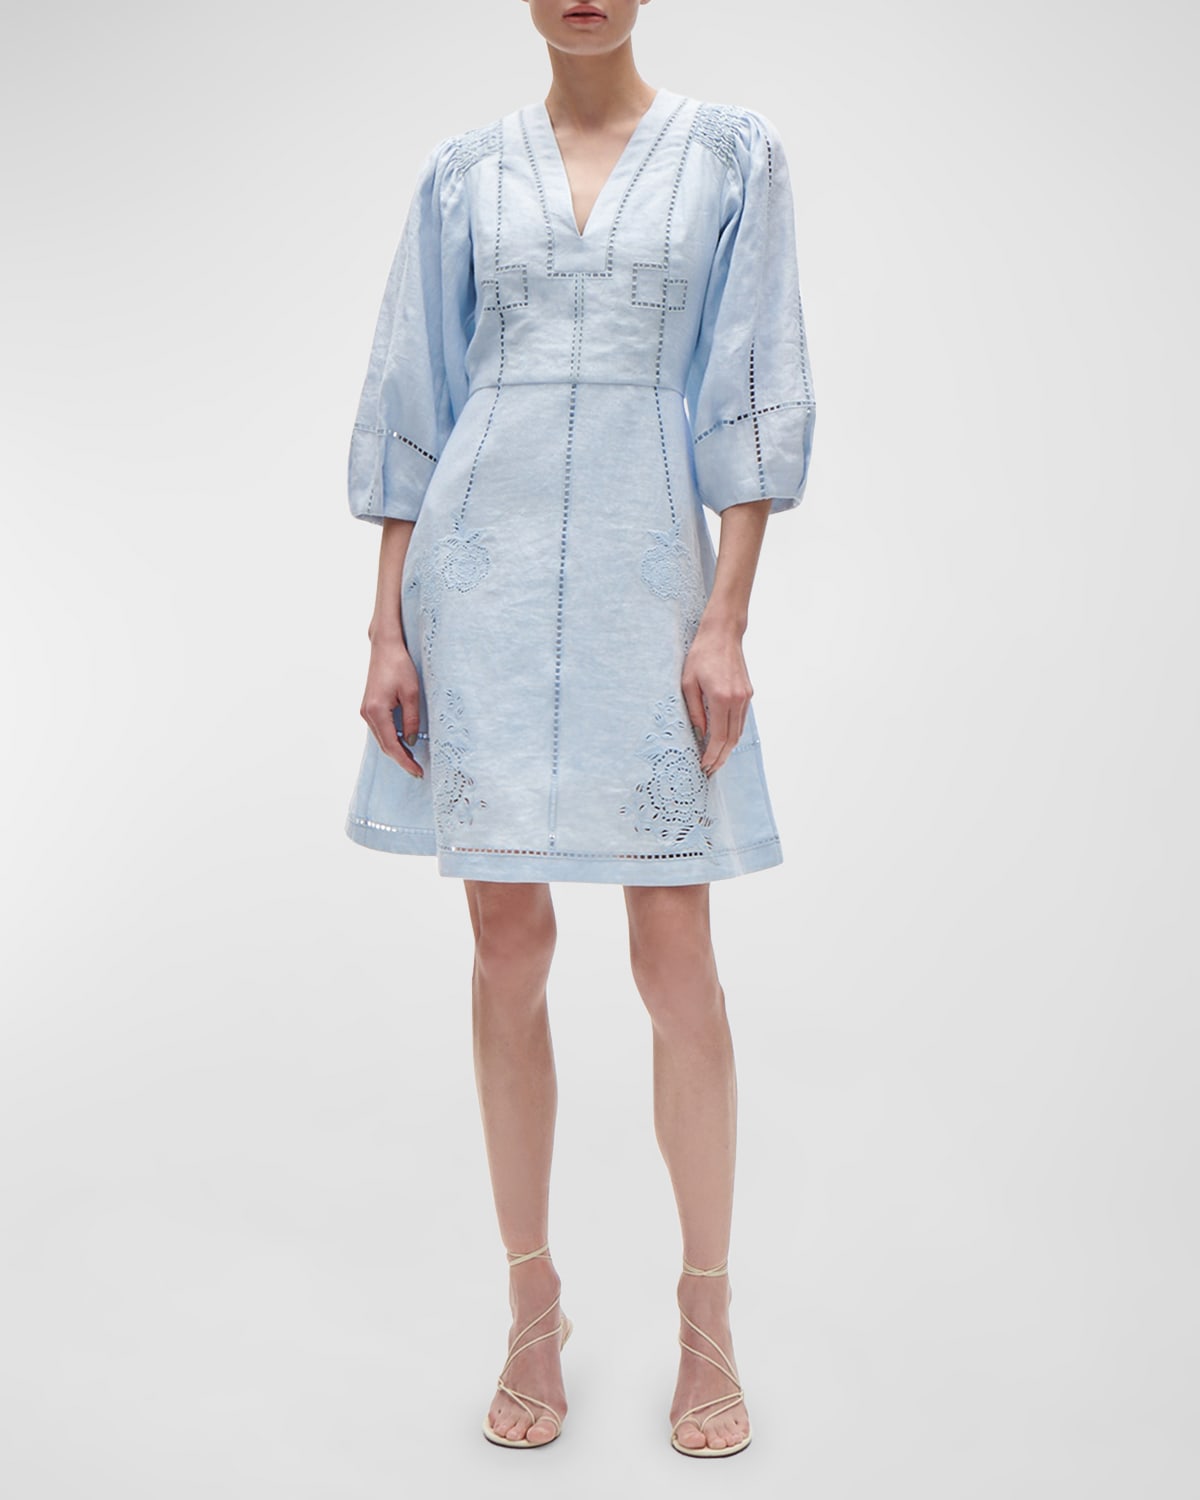 Verna Lattice Embroidered 3/4-Sleeve Linen Mini Dress